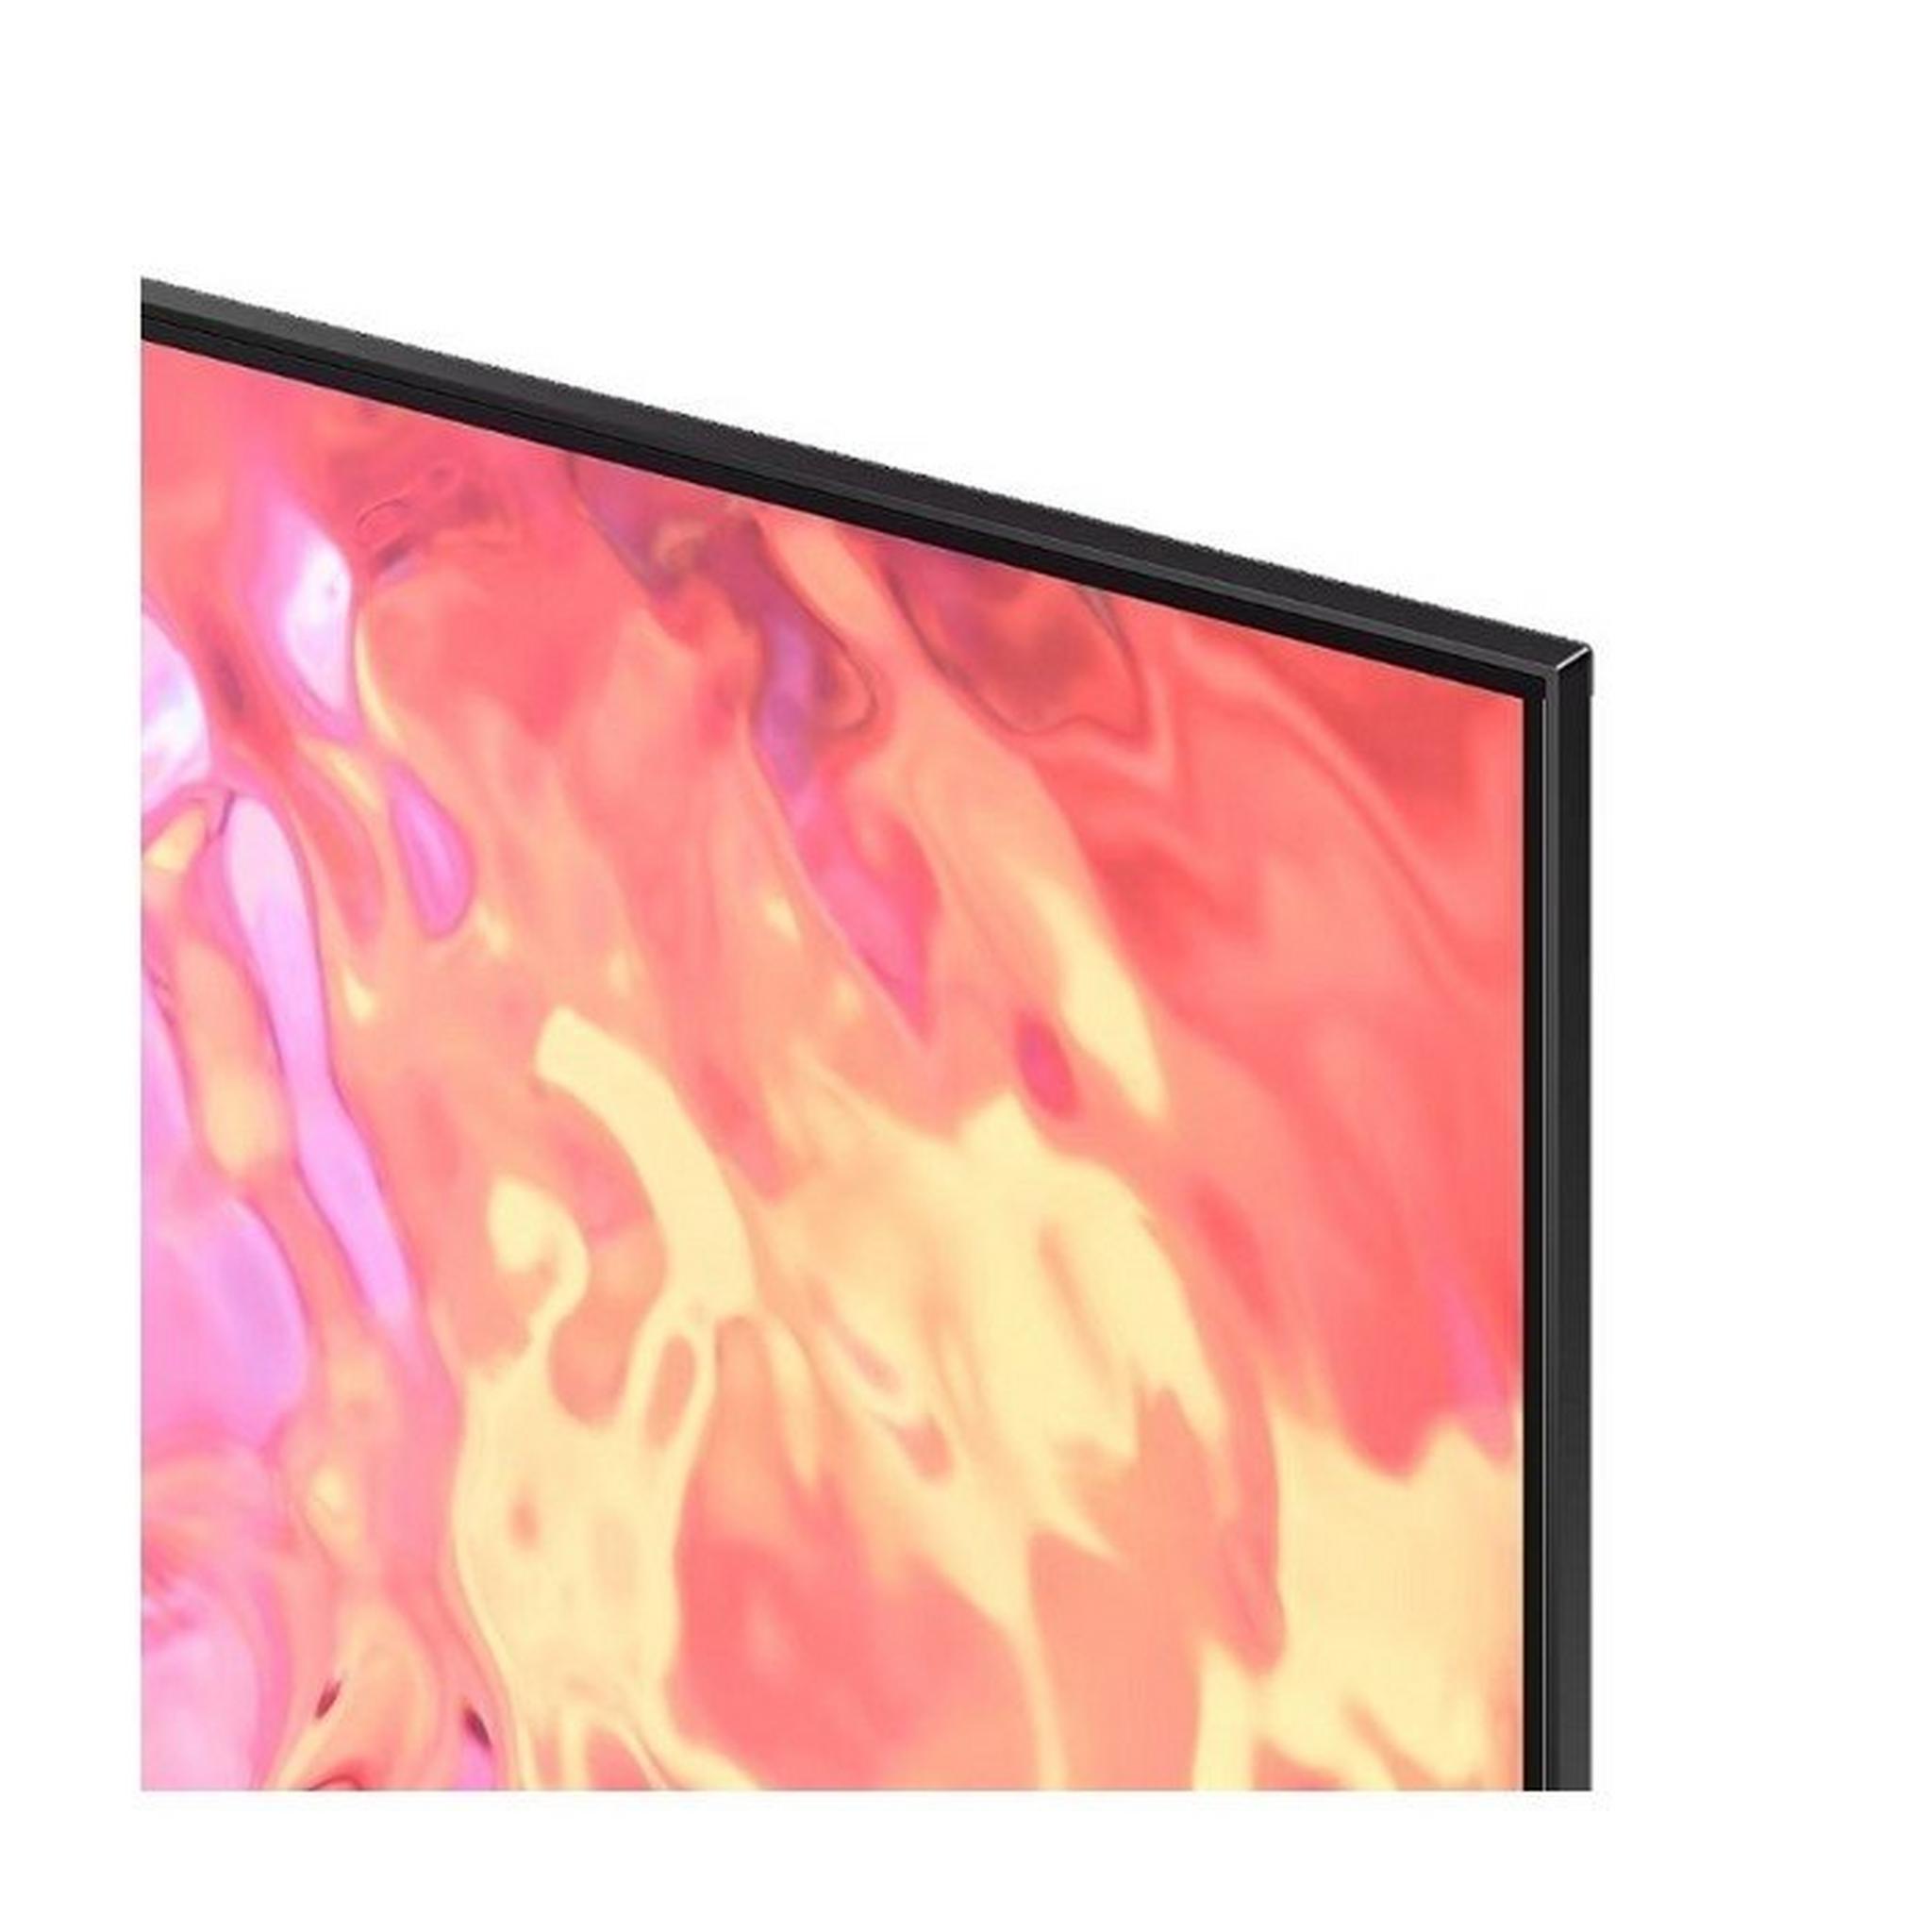 Samsung Q60C 75-inch 4K Smart QLED TV, QA75Q60CAUXZN – Black